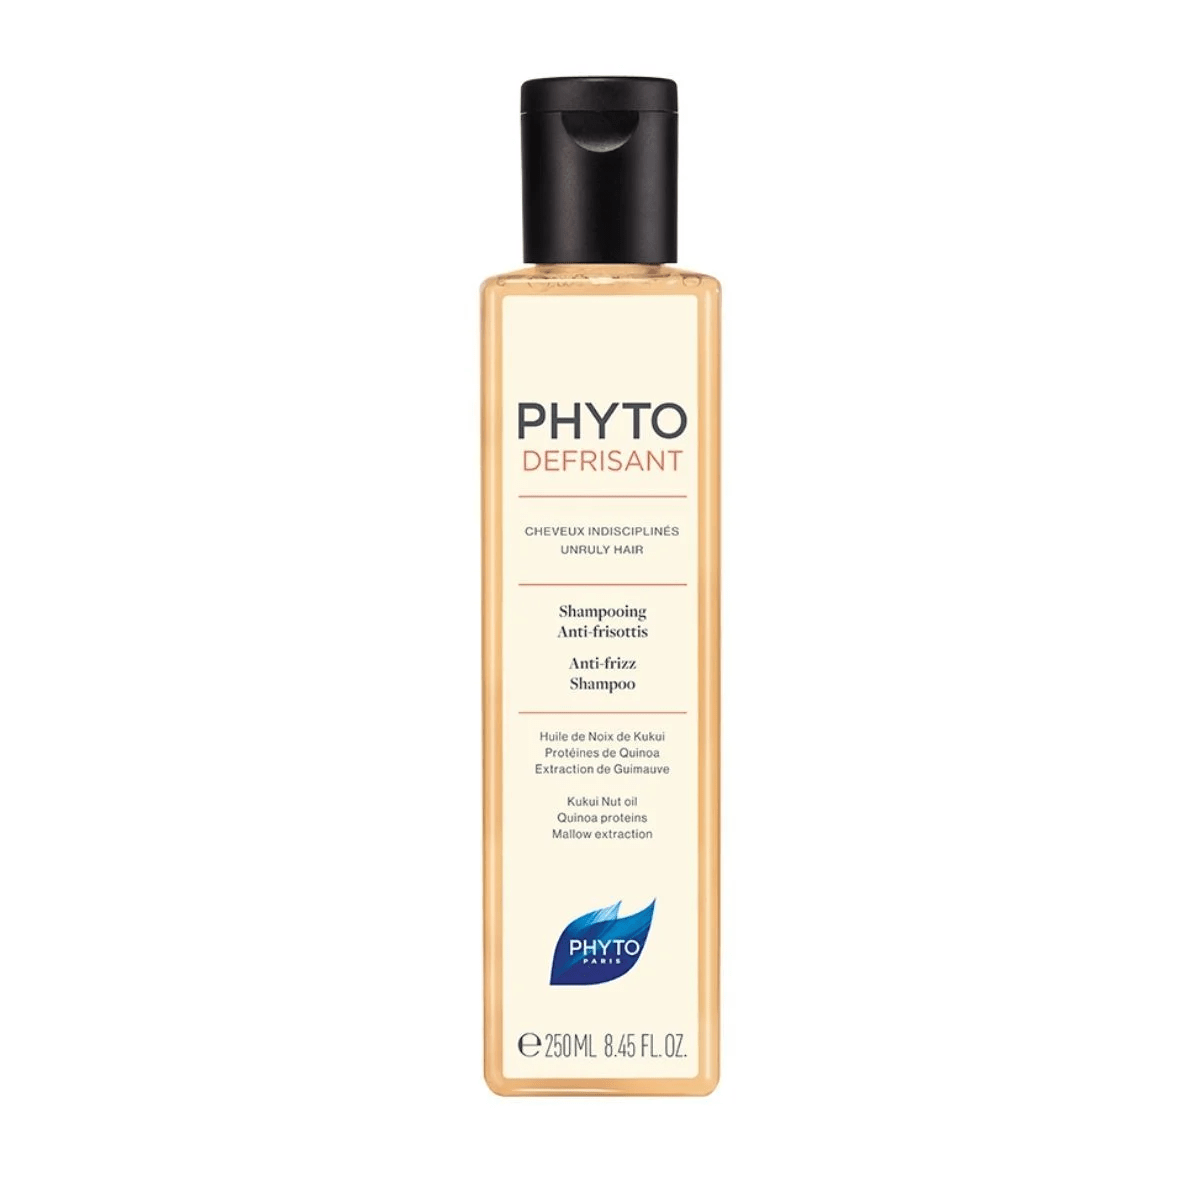 PHYTO Soins & Beauté Phytodefrisant (shampoing anti-frisottis) 250ml